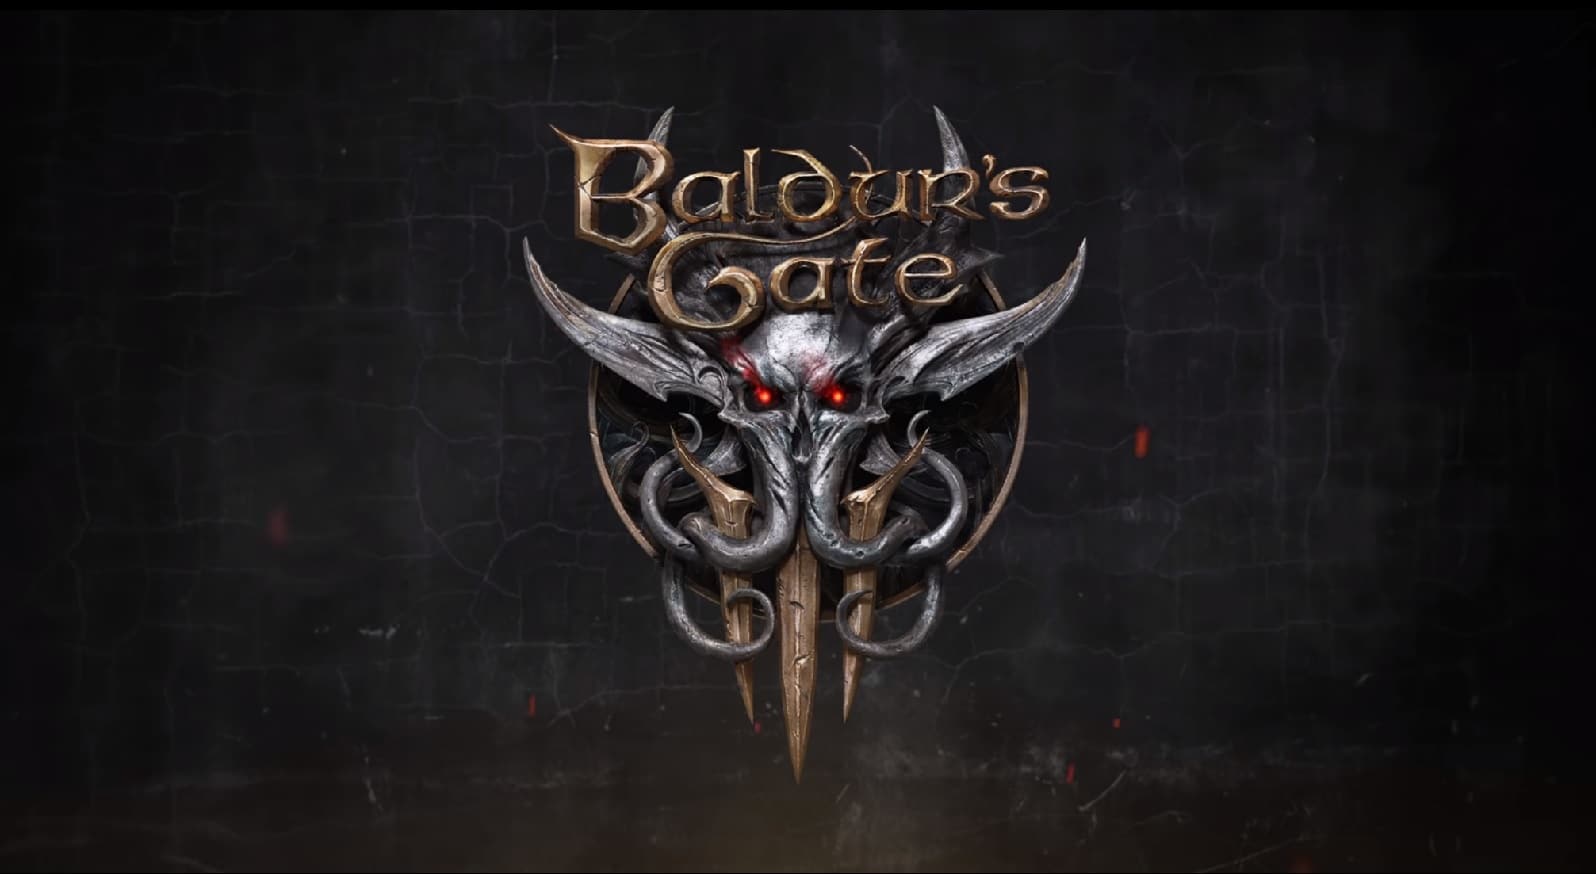 Baldur's Gate III